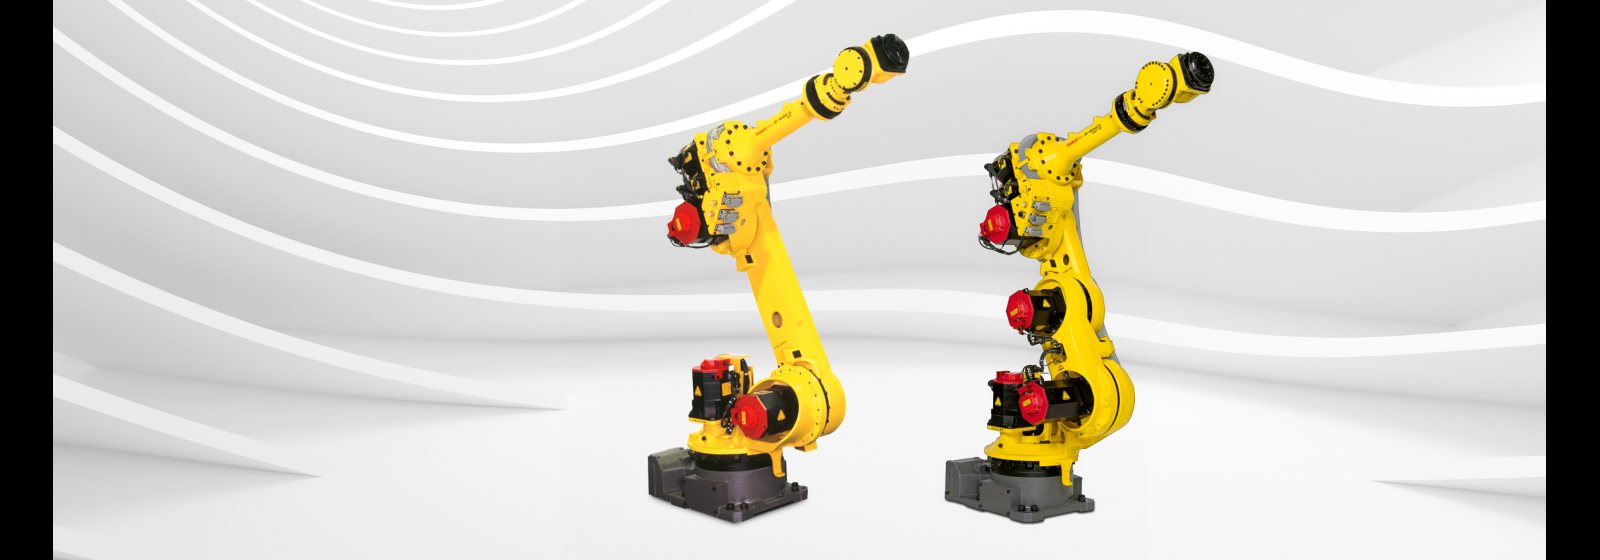 3 FANUC R-1000 industrial robots